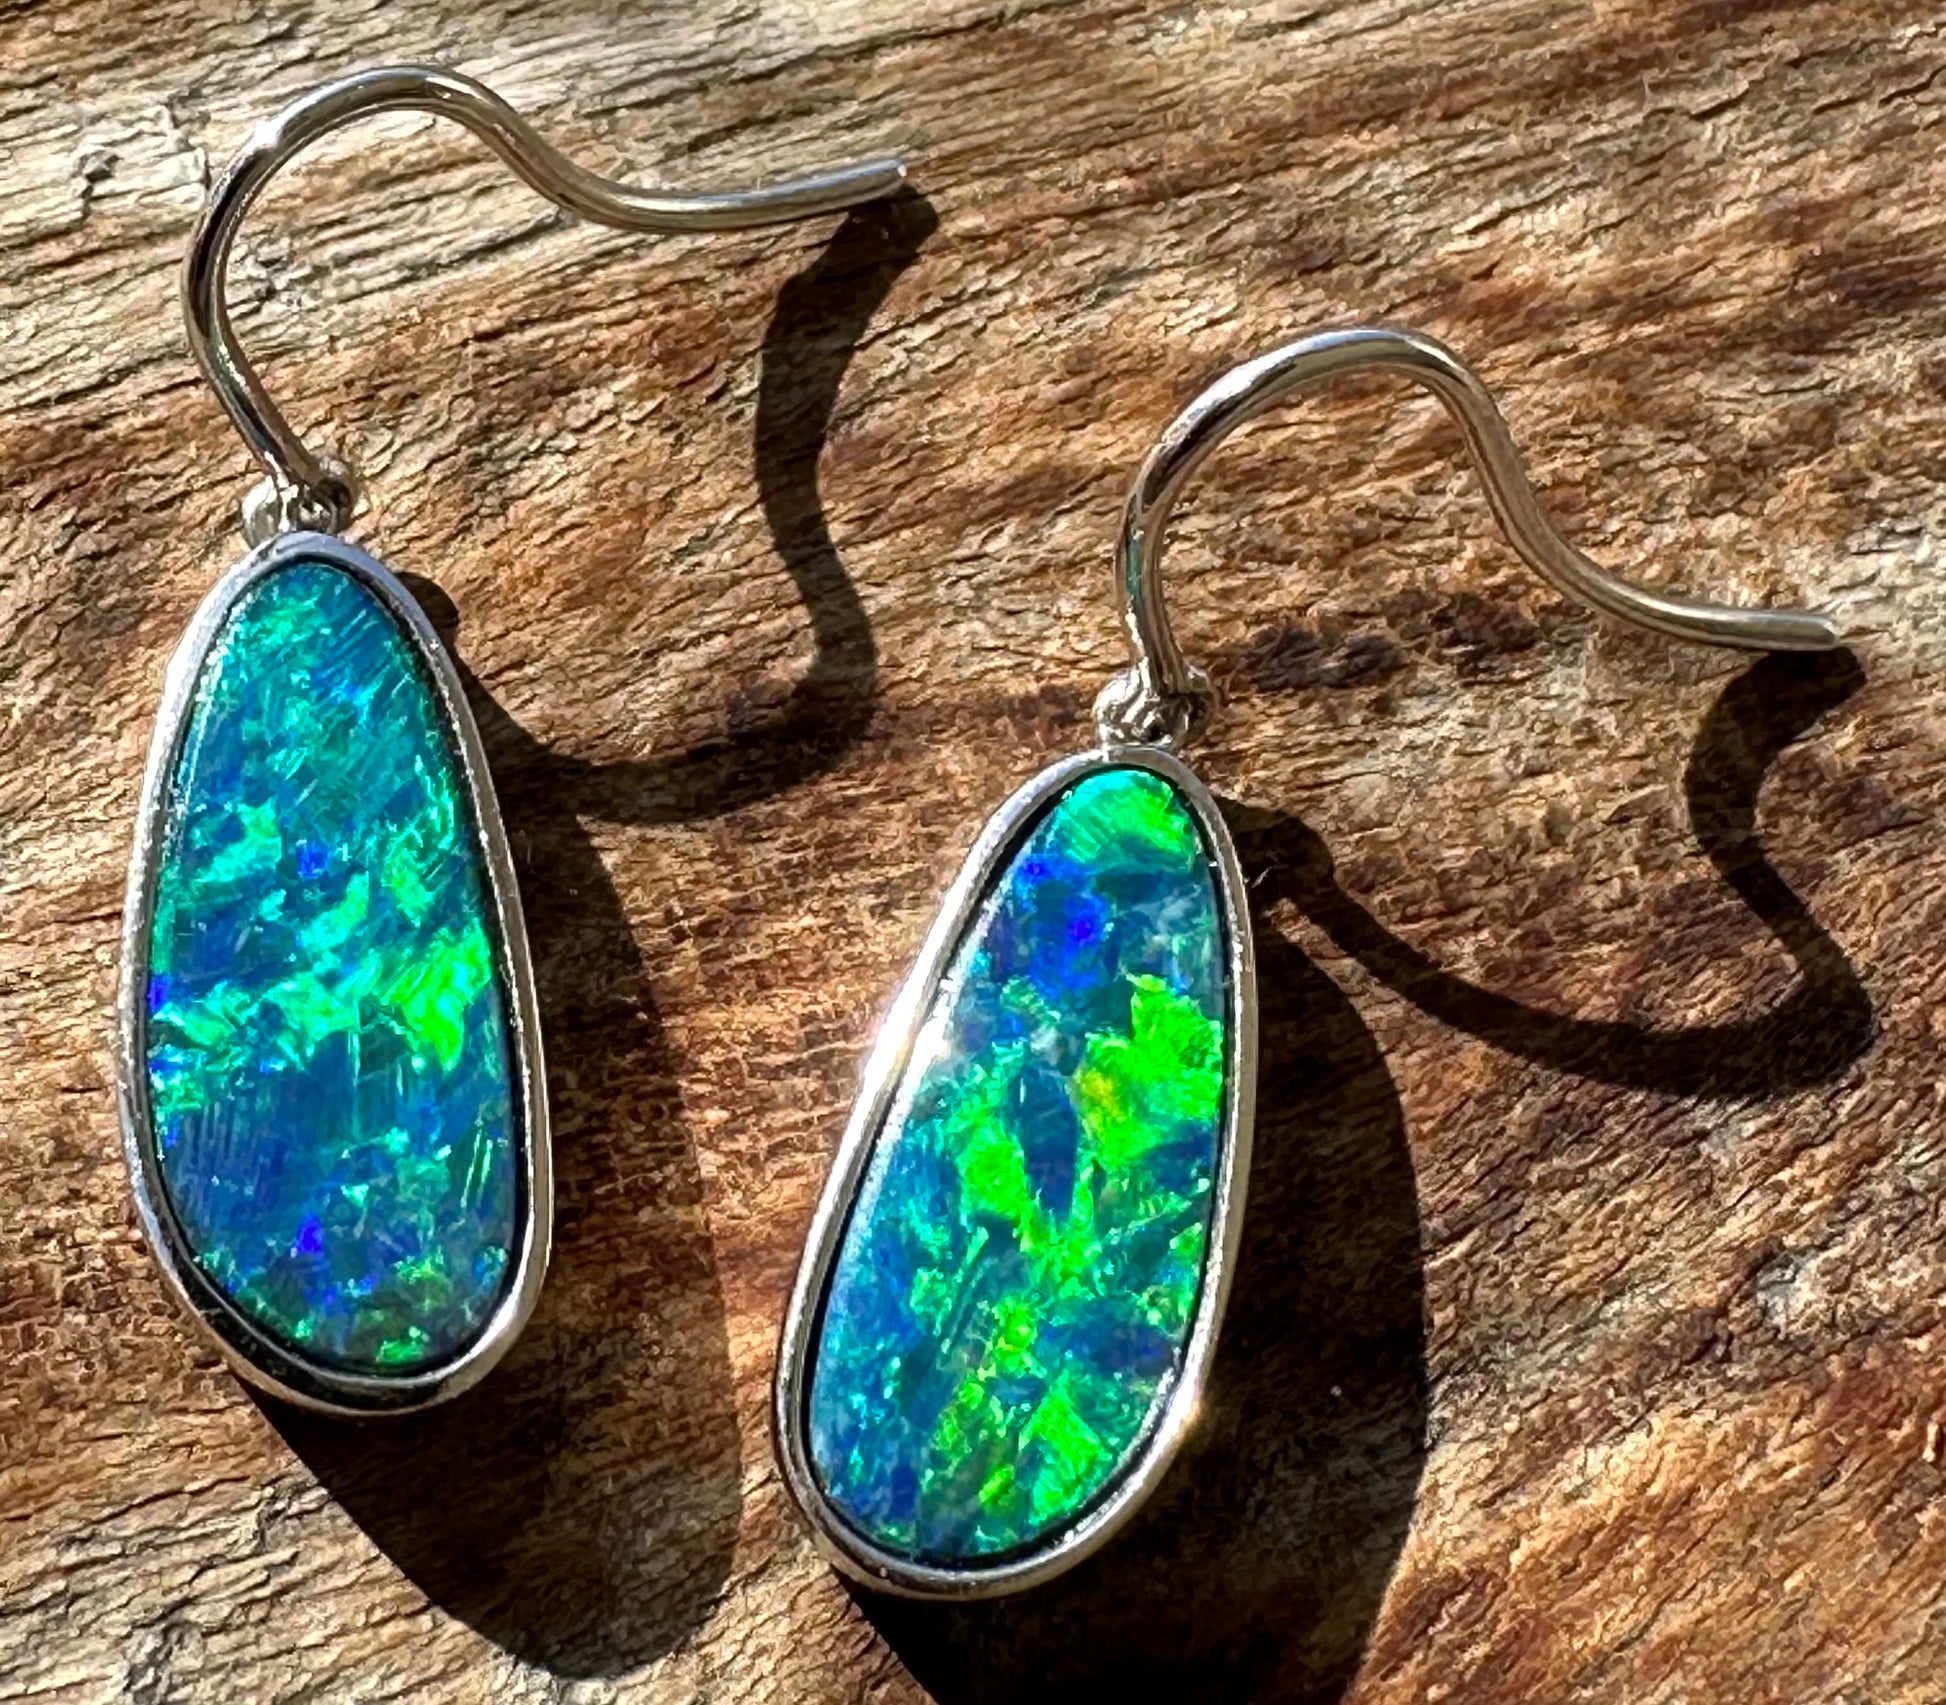 Brilliant opal earrings set in 14k white gold